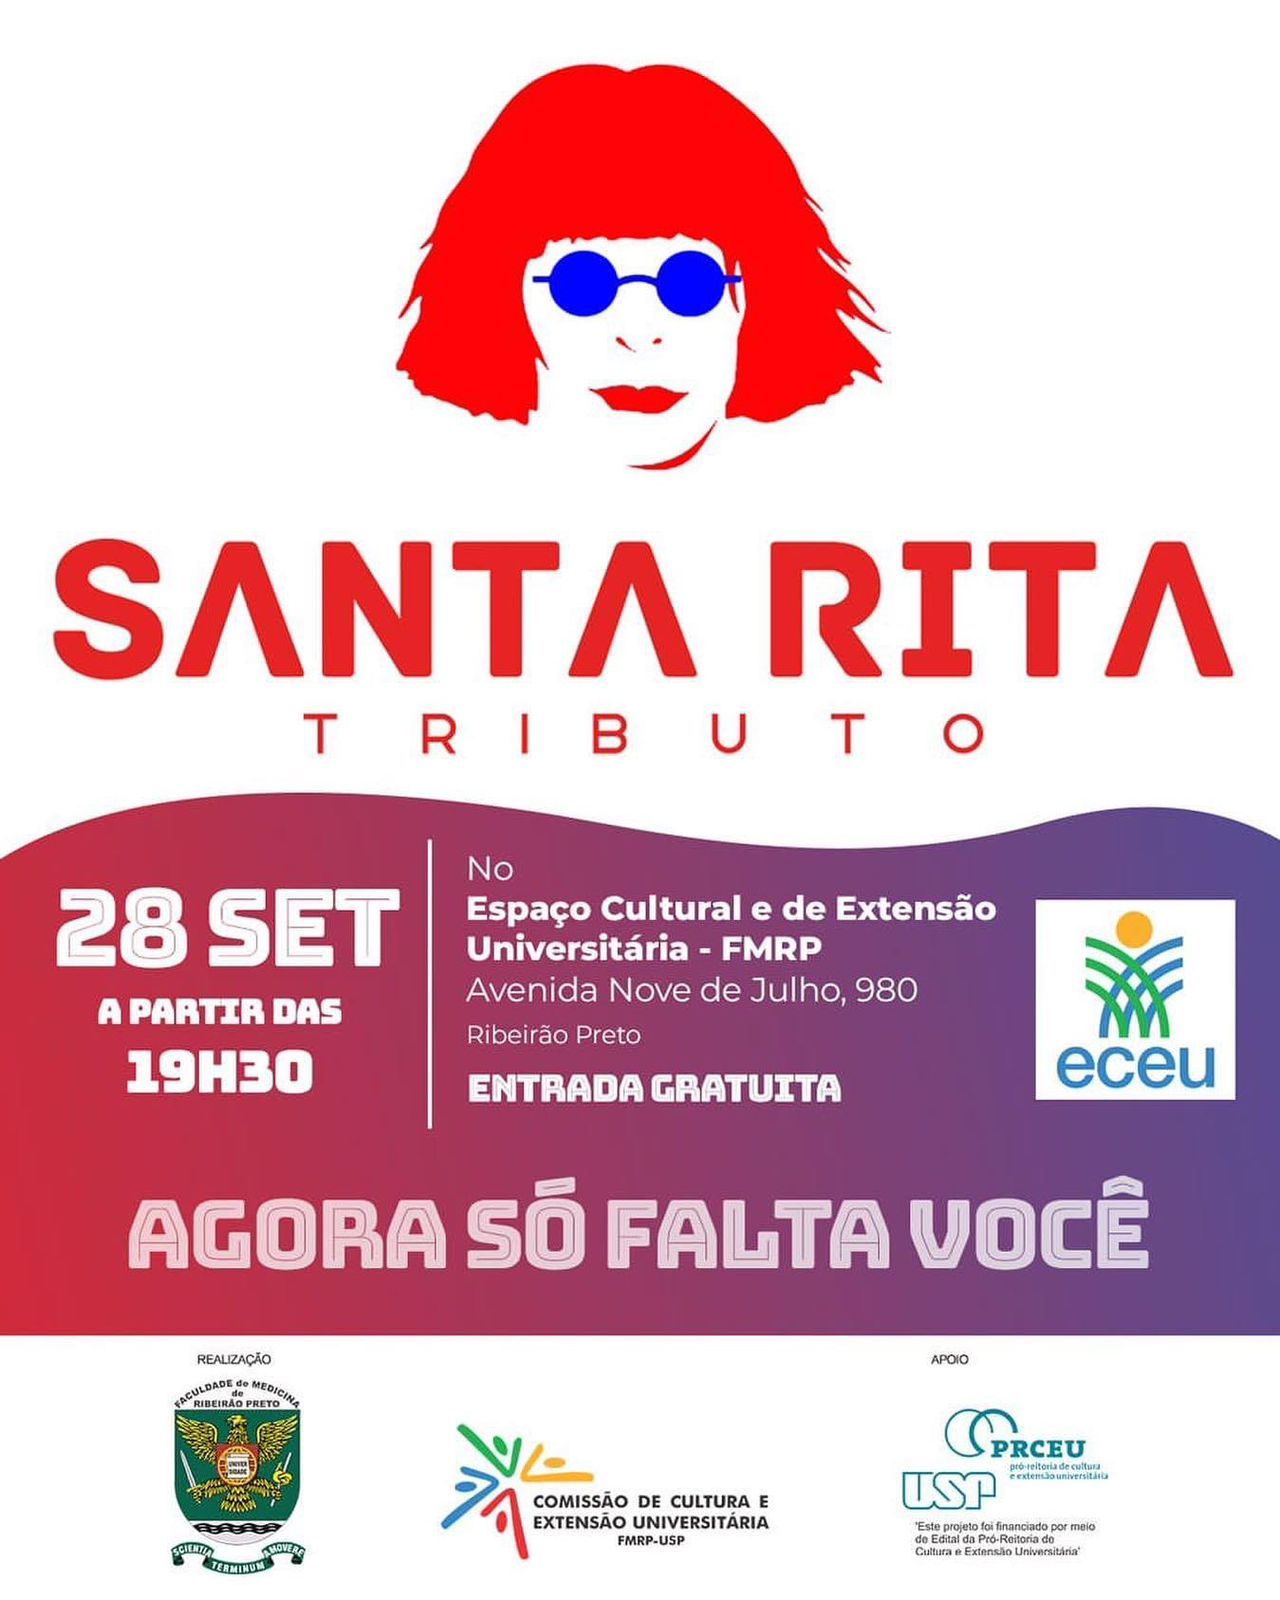 (Português) SANTA RITA – TRIBUTO